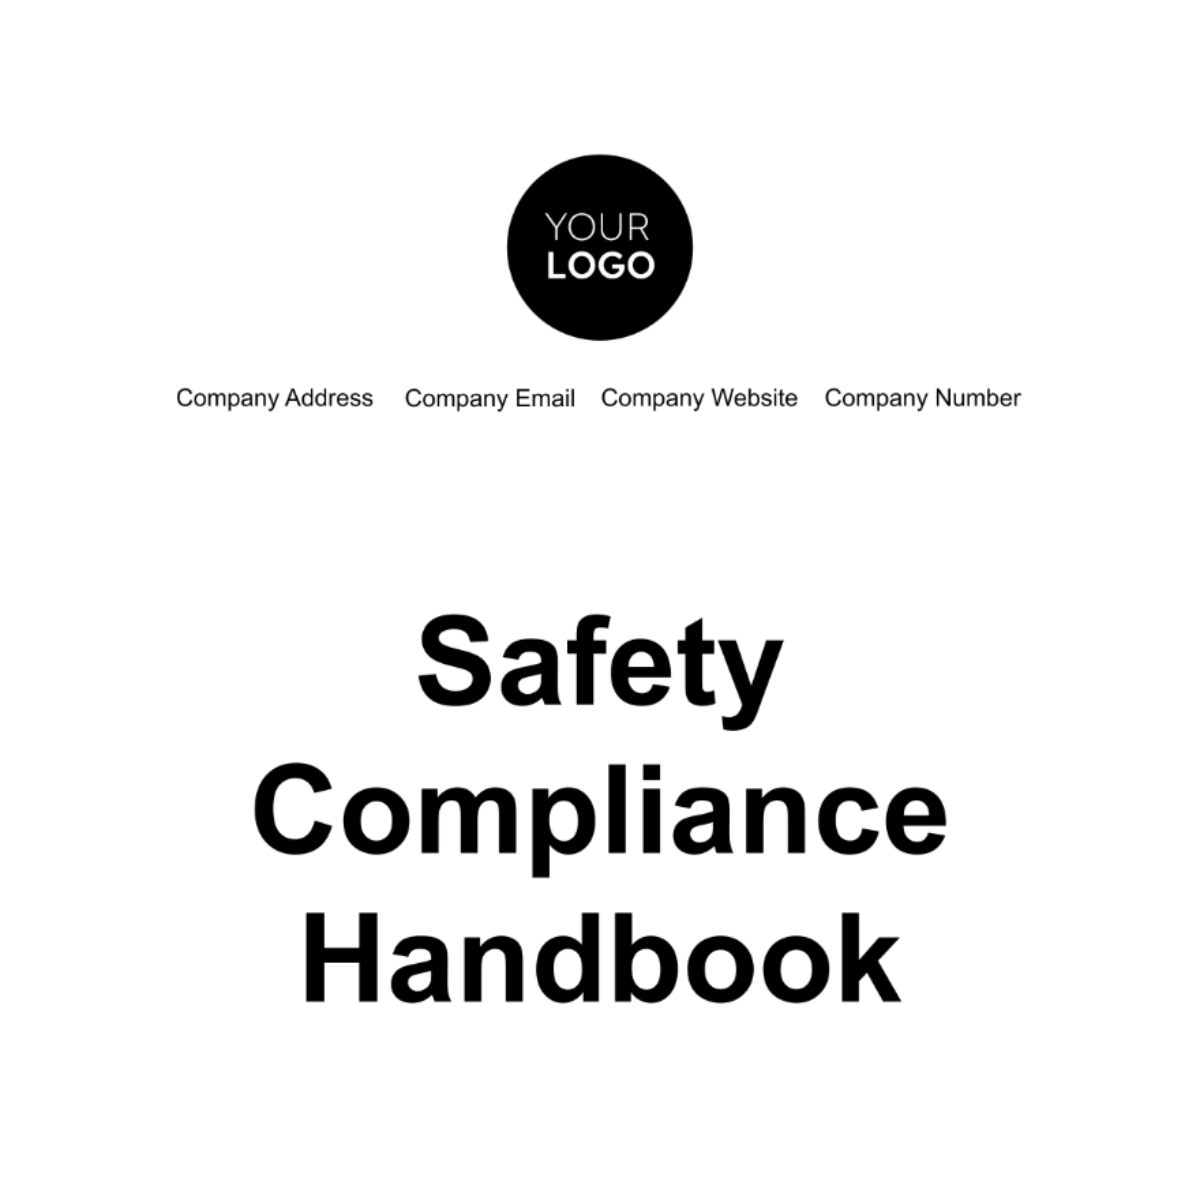 Safety Compliance Handbook Template